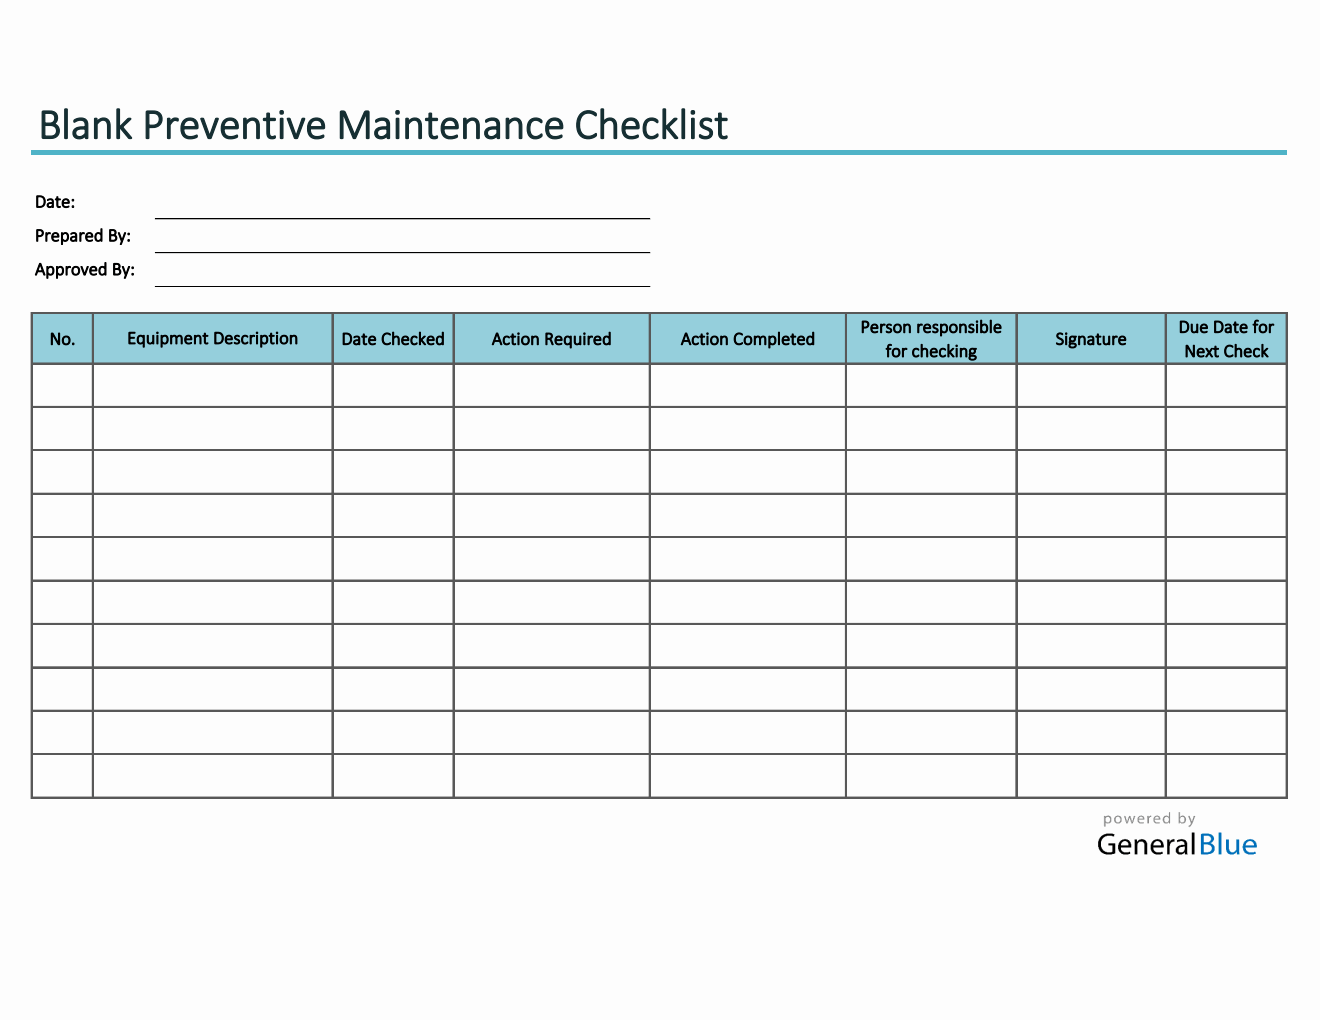 Blank Preventive Maintenance Checklist in Excel